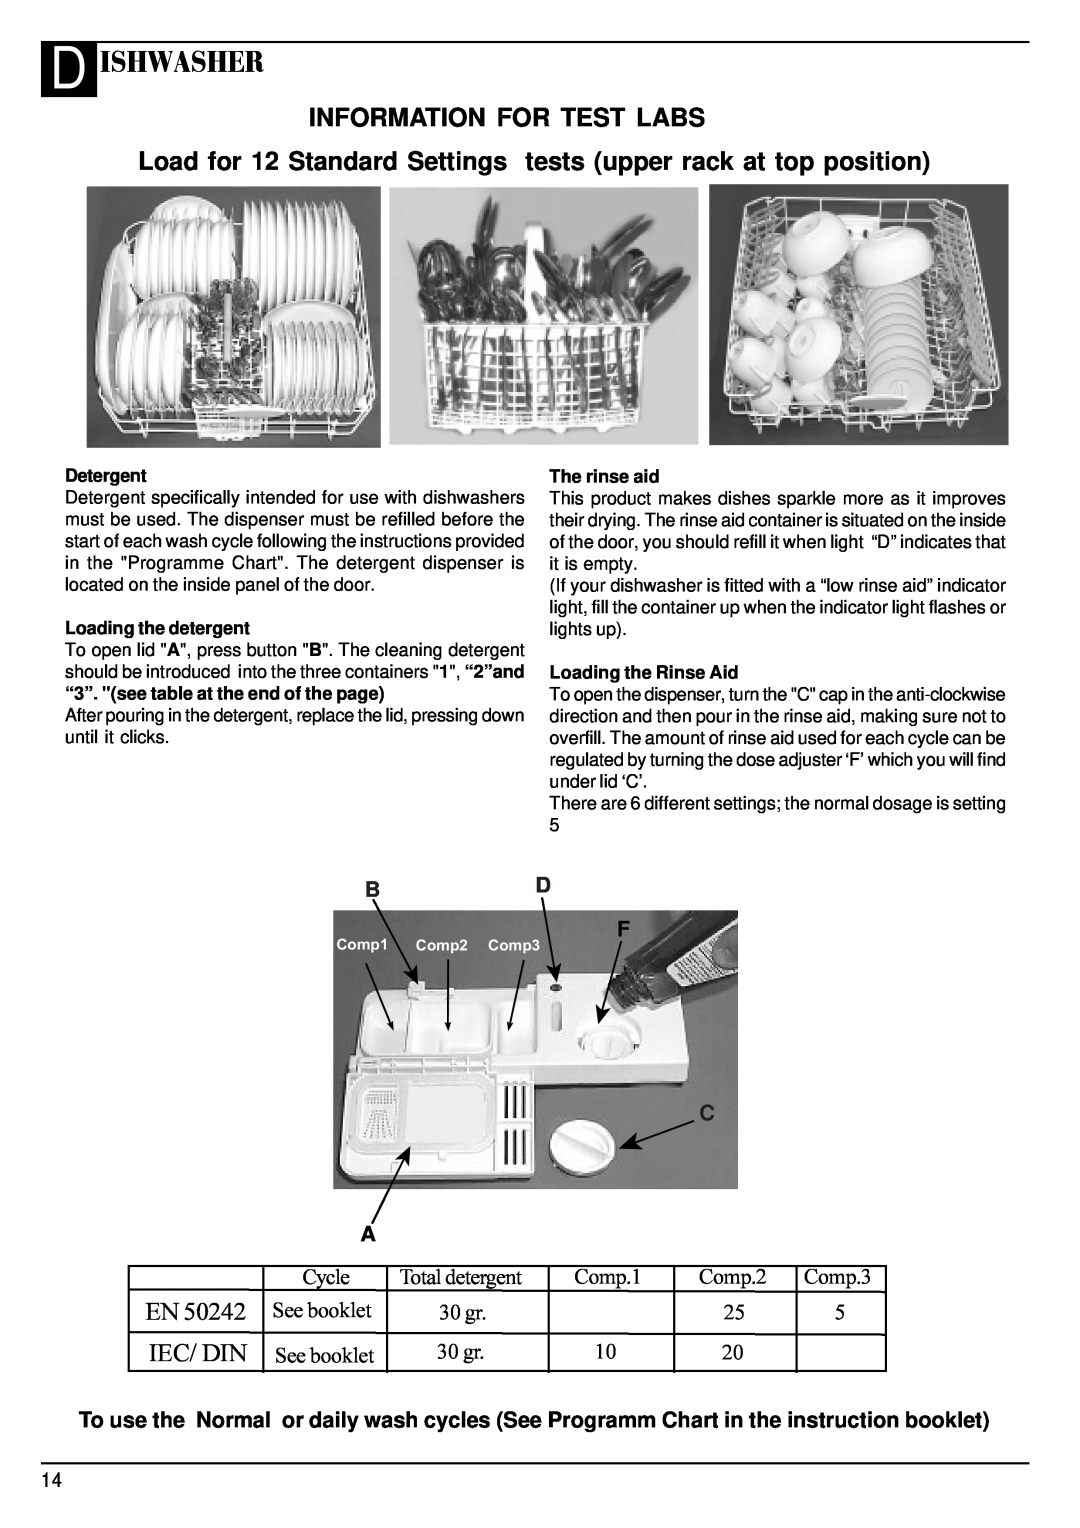 Hotpoint BFI62 manual Information For Test Labs, D Ishwasher, Iec/ Din, Bd F, See booklet, Detergent, Loading the detergent 